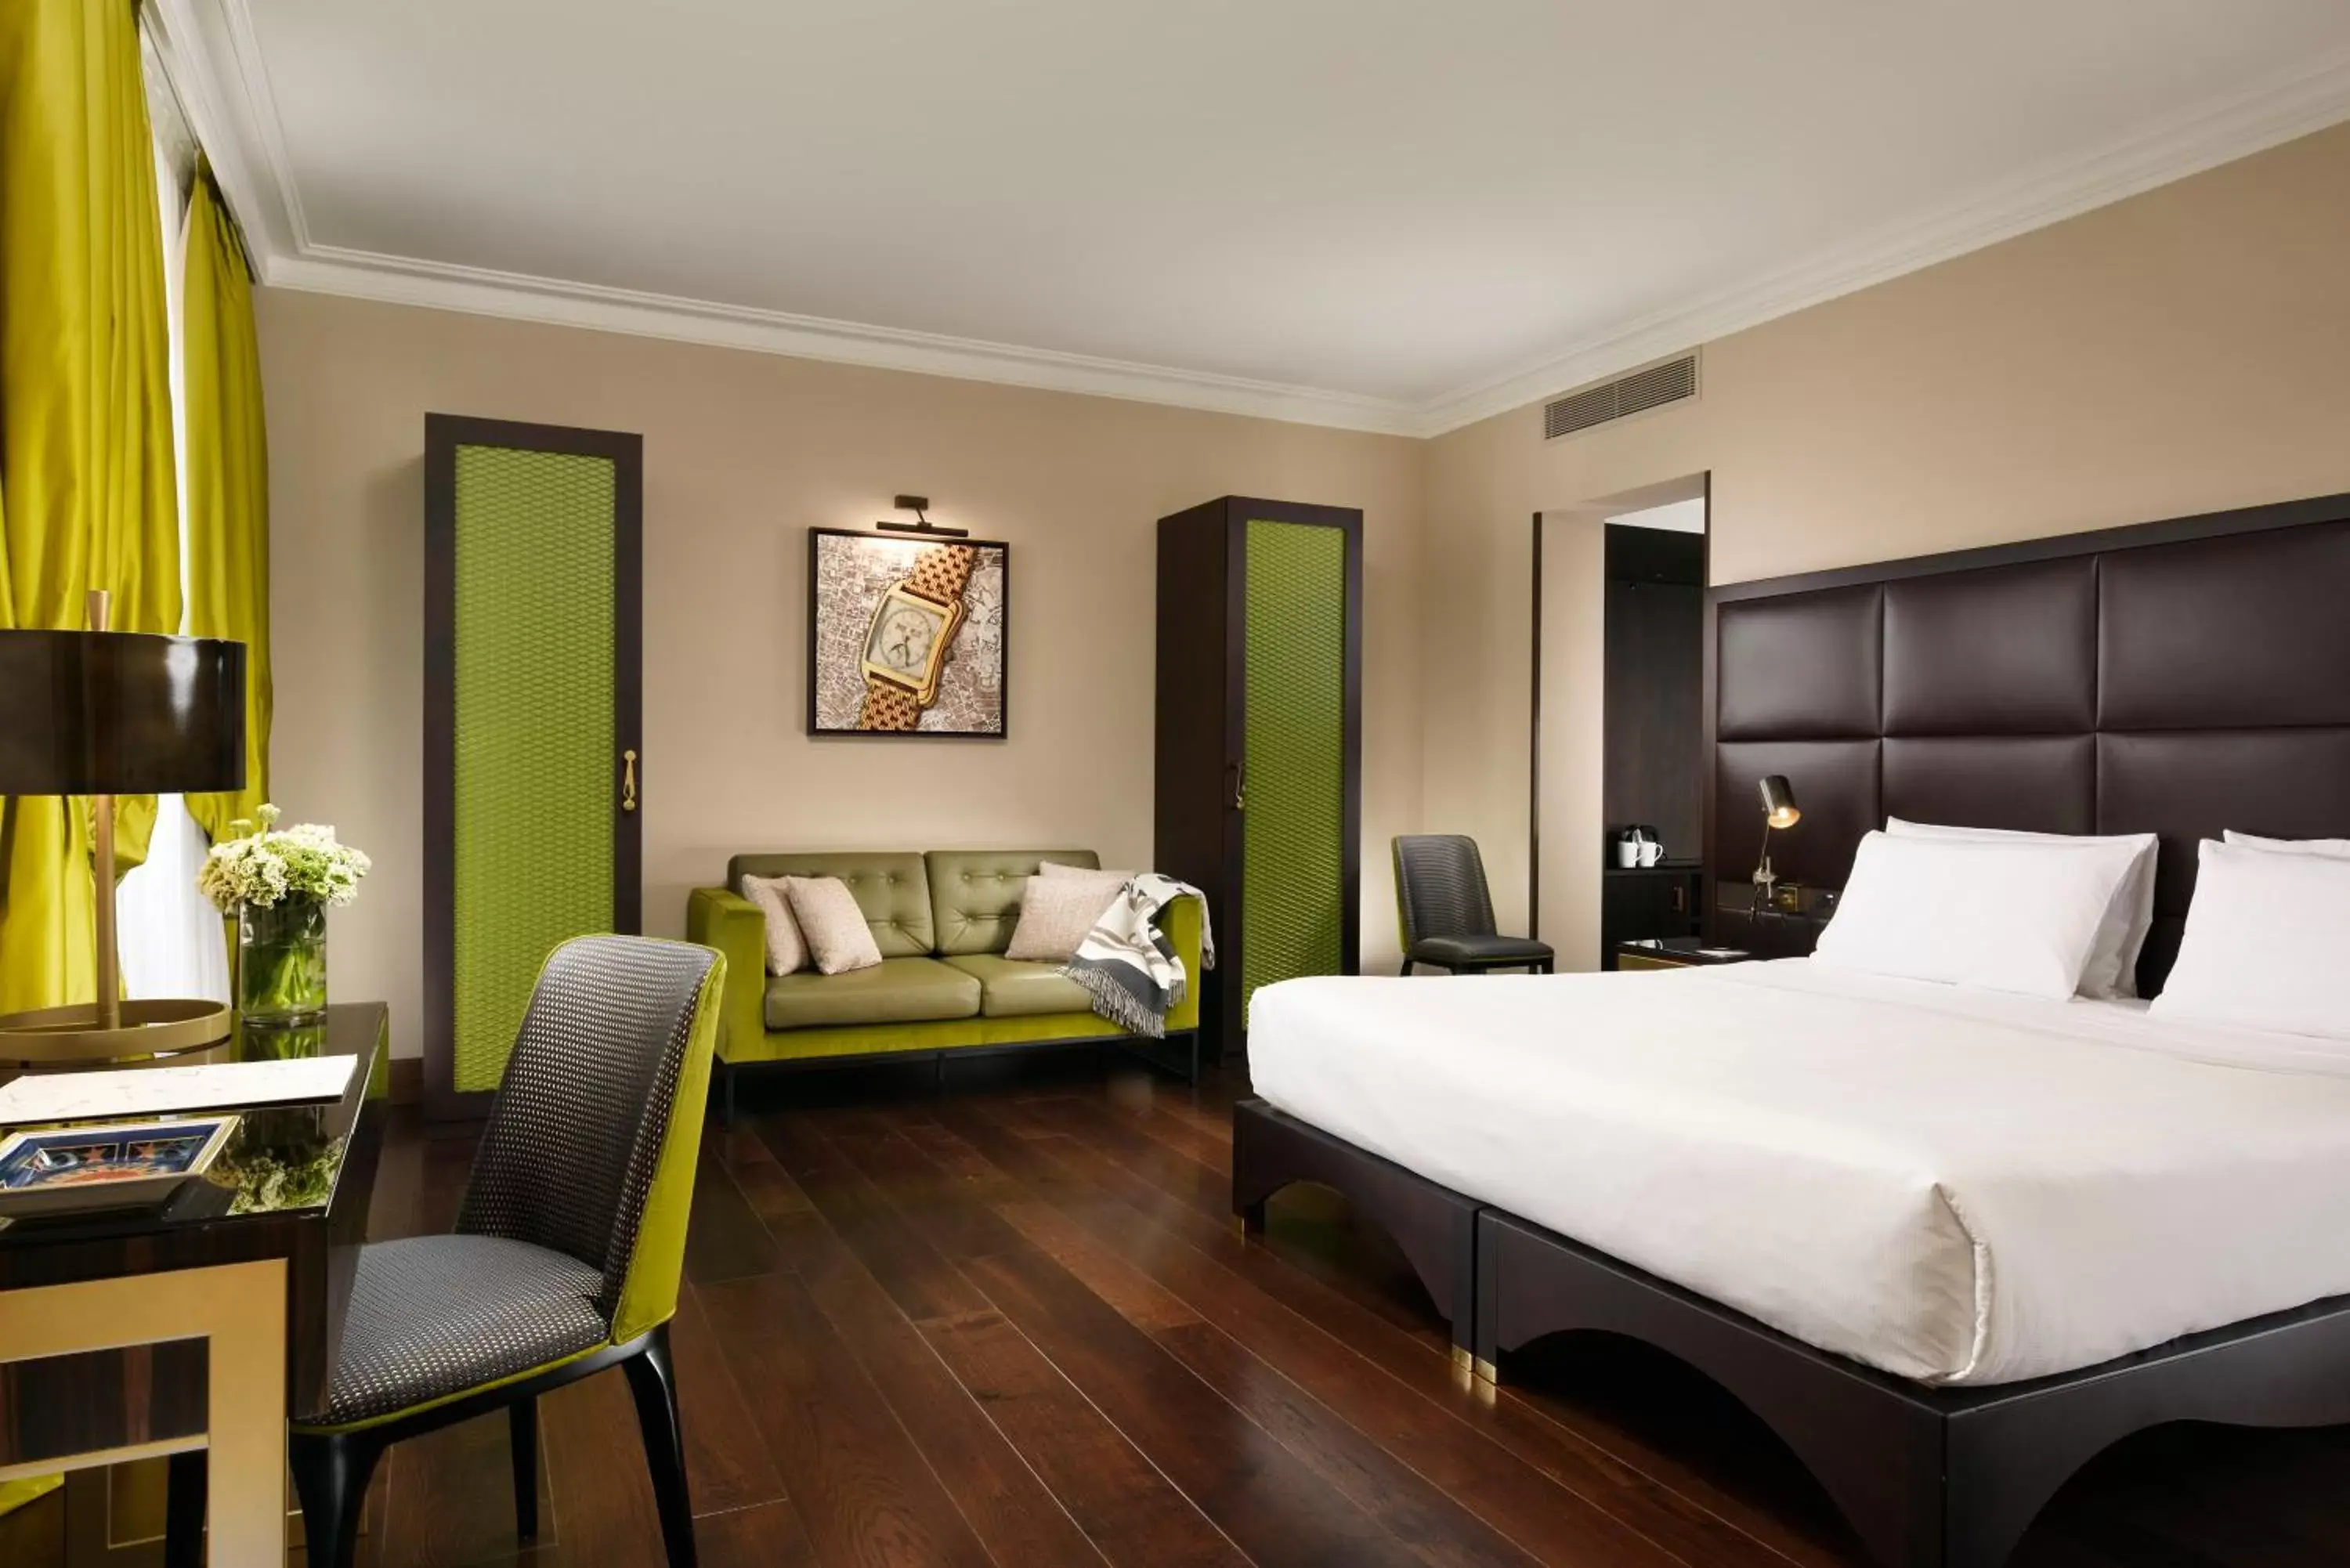 Bedroom in Hotel L'Orologio Roma - WTB Hotels